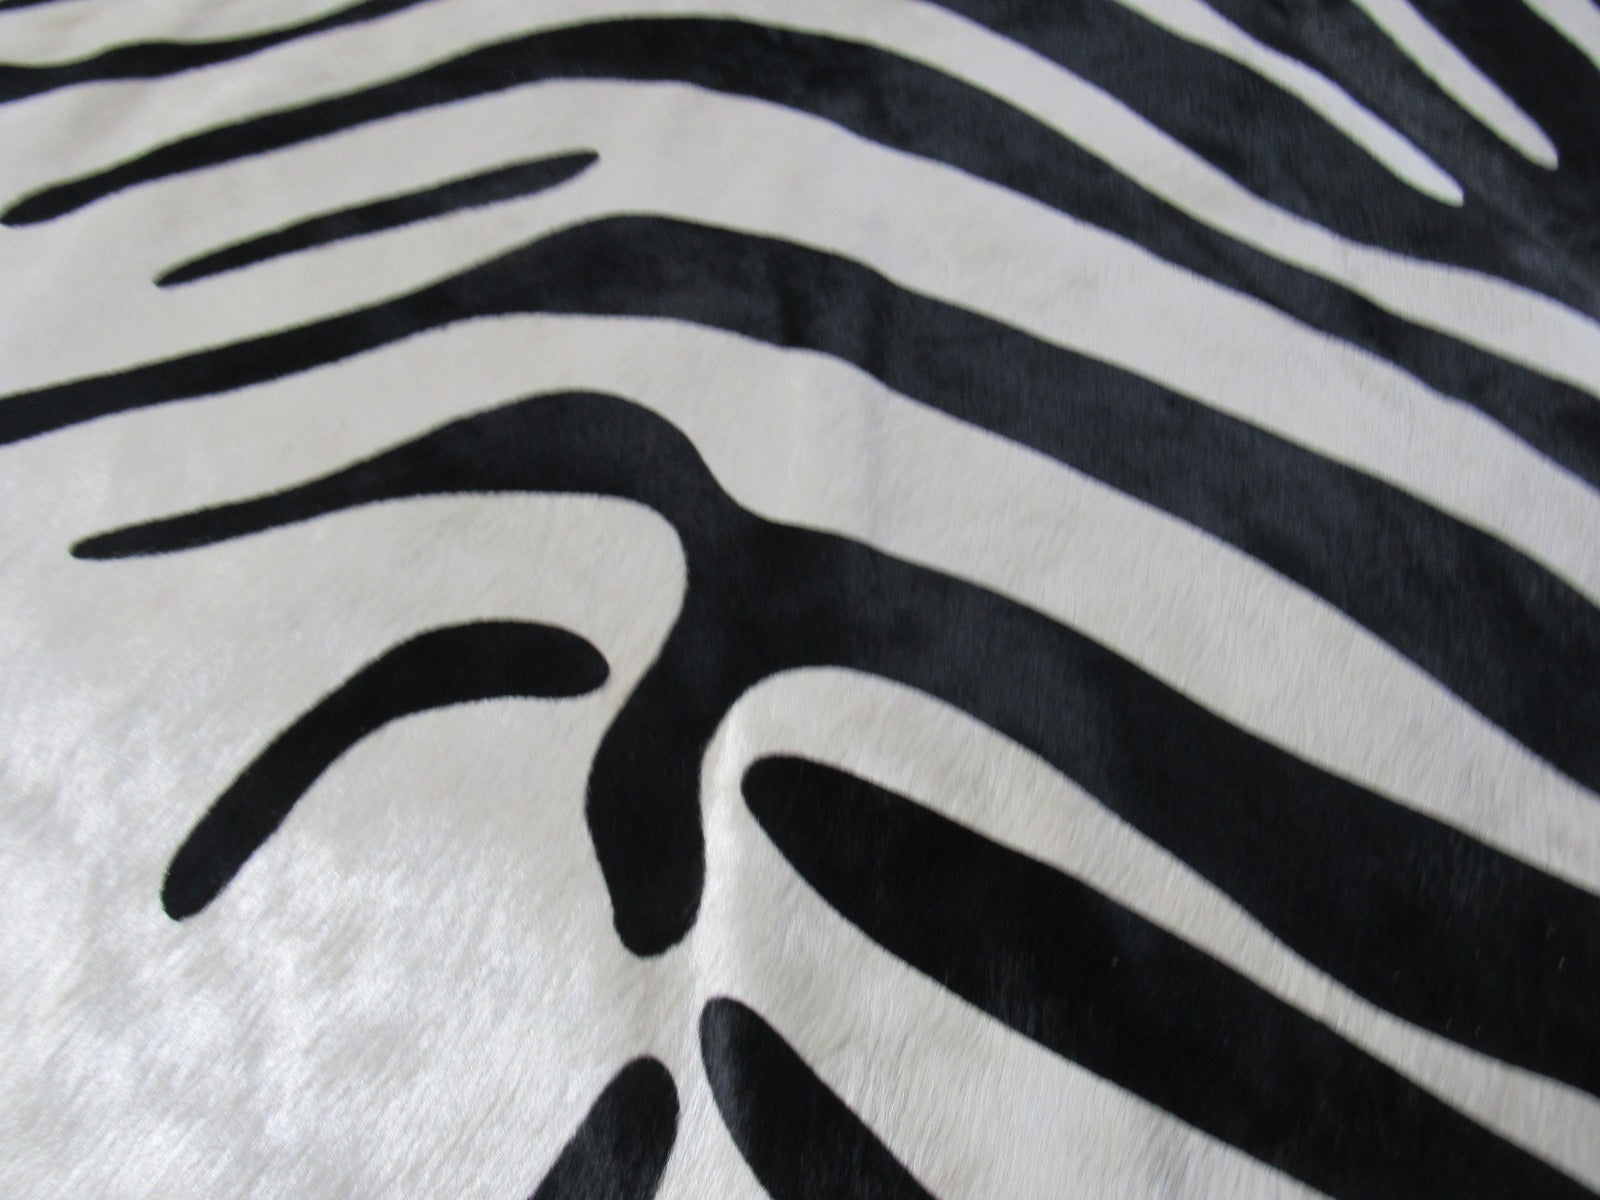 Perfect Quality Zebra Print Cowhide Rug (shiny hair) Size: 6.3x5.5 feet M-1516